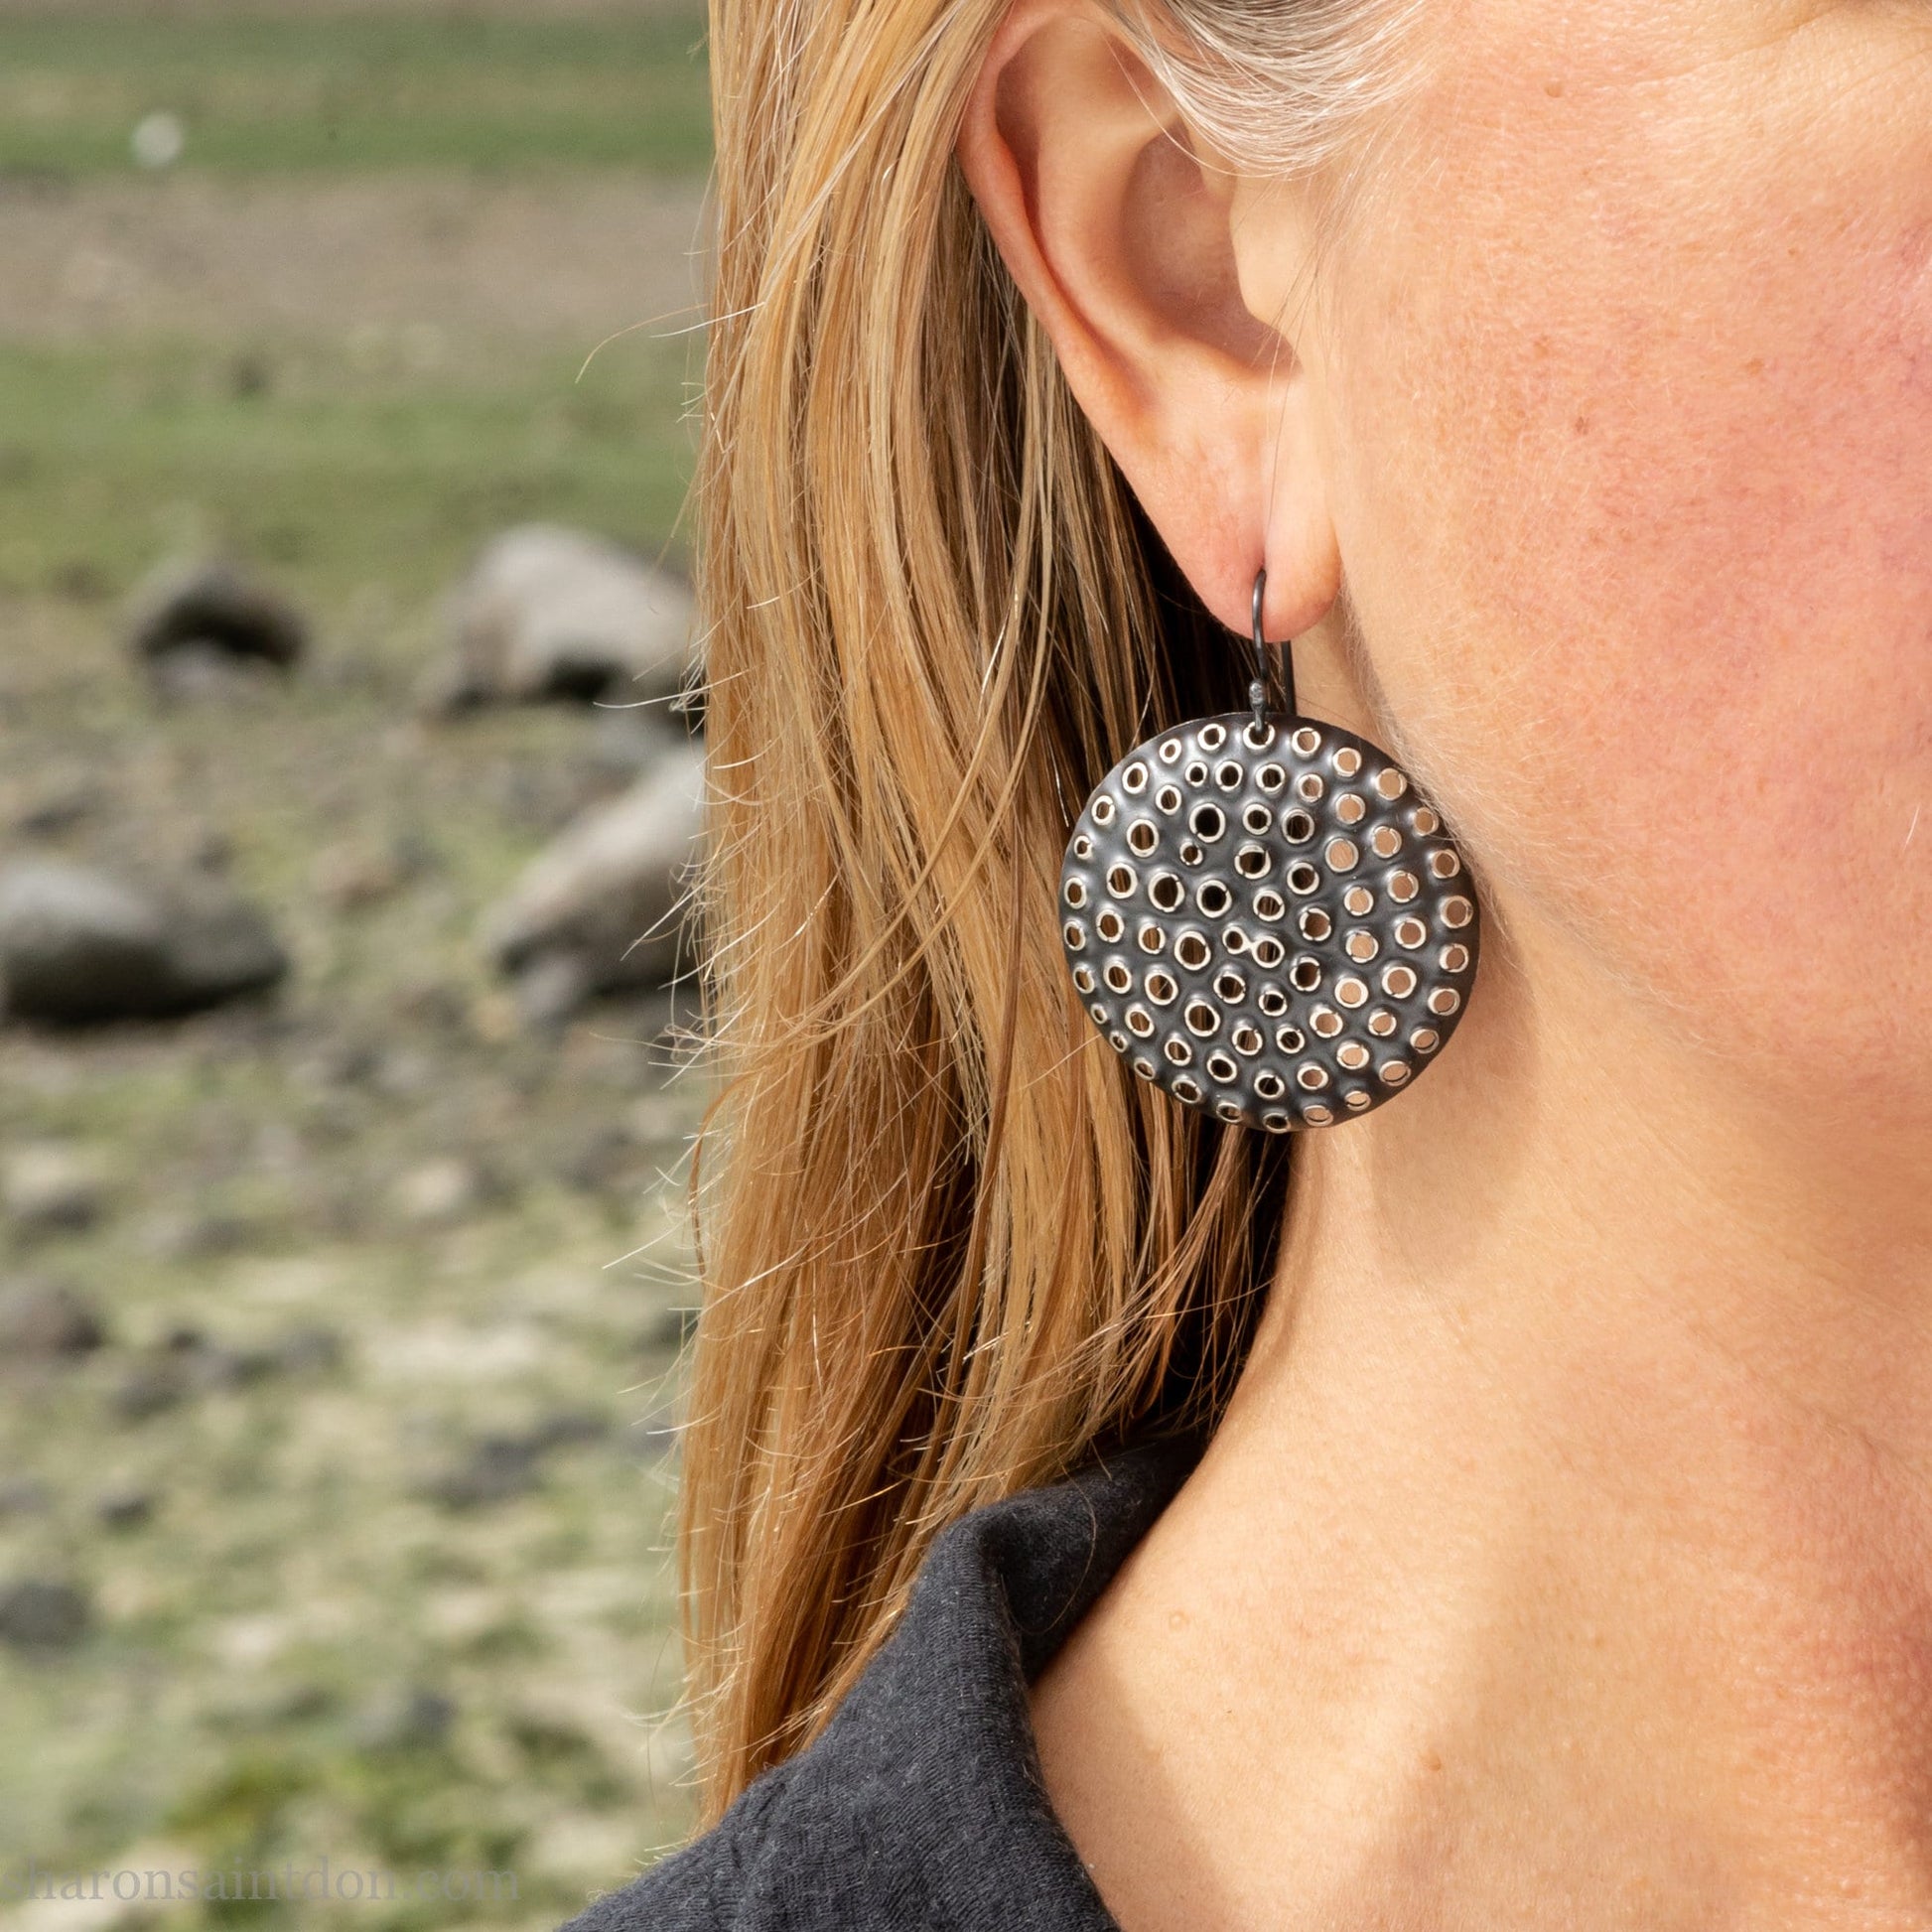 925 sterling silver handmade earrings for women. Comfortable, light, round disc, dangle earrings w/ mesh dots and ear wire hooks.